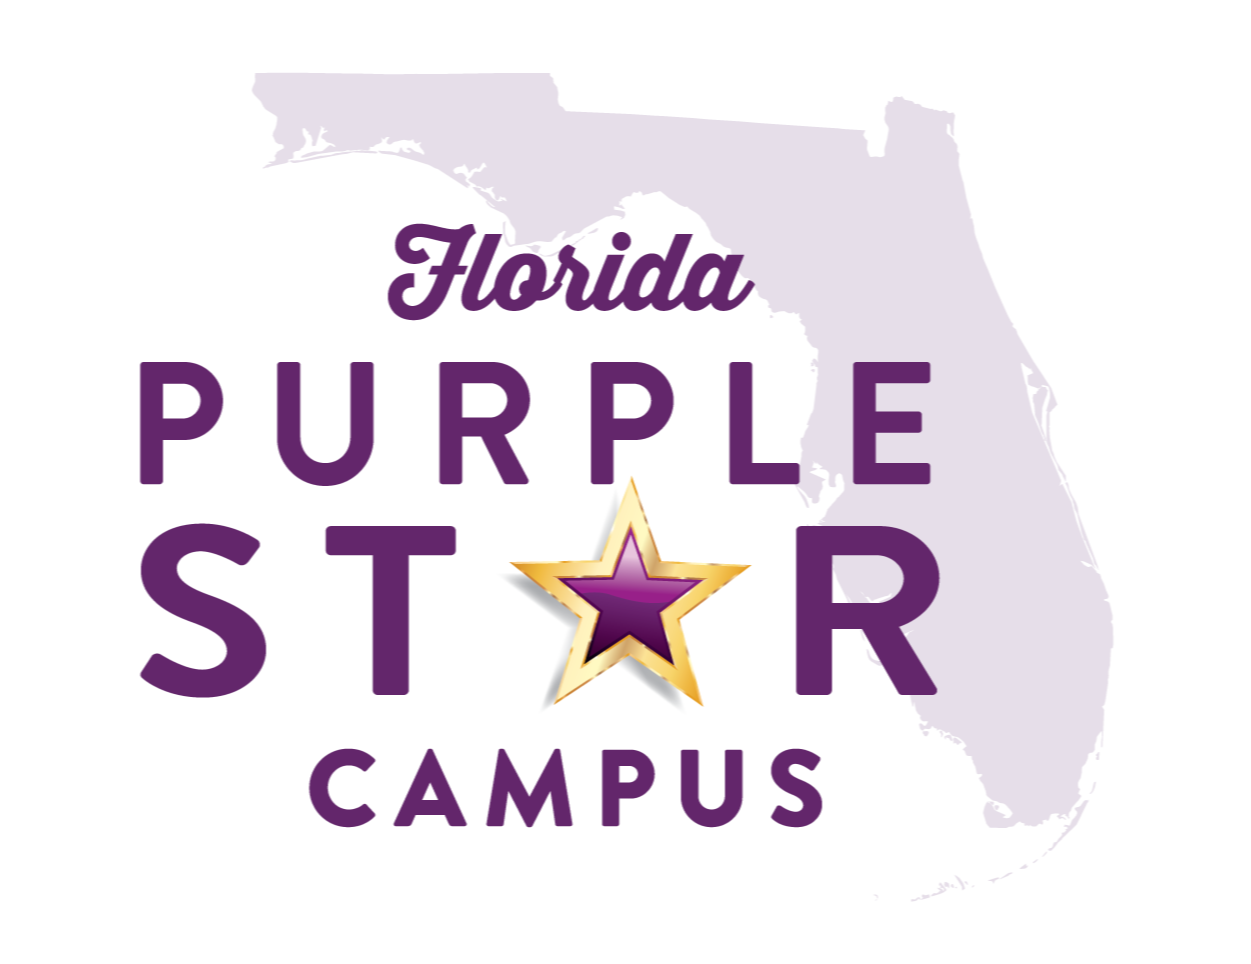 Florida Purple Star Campus